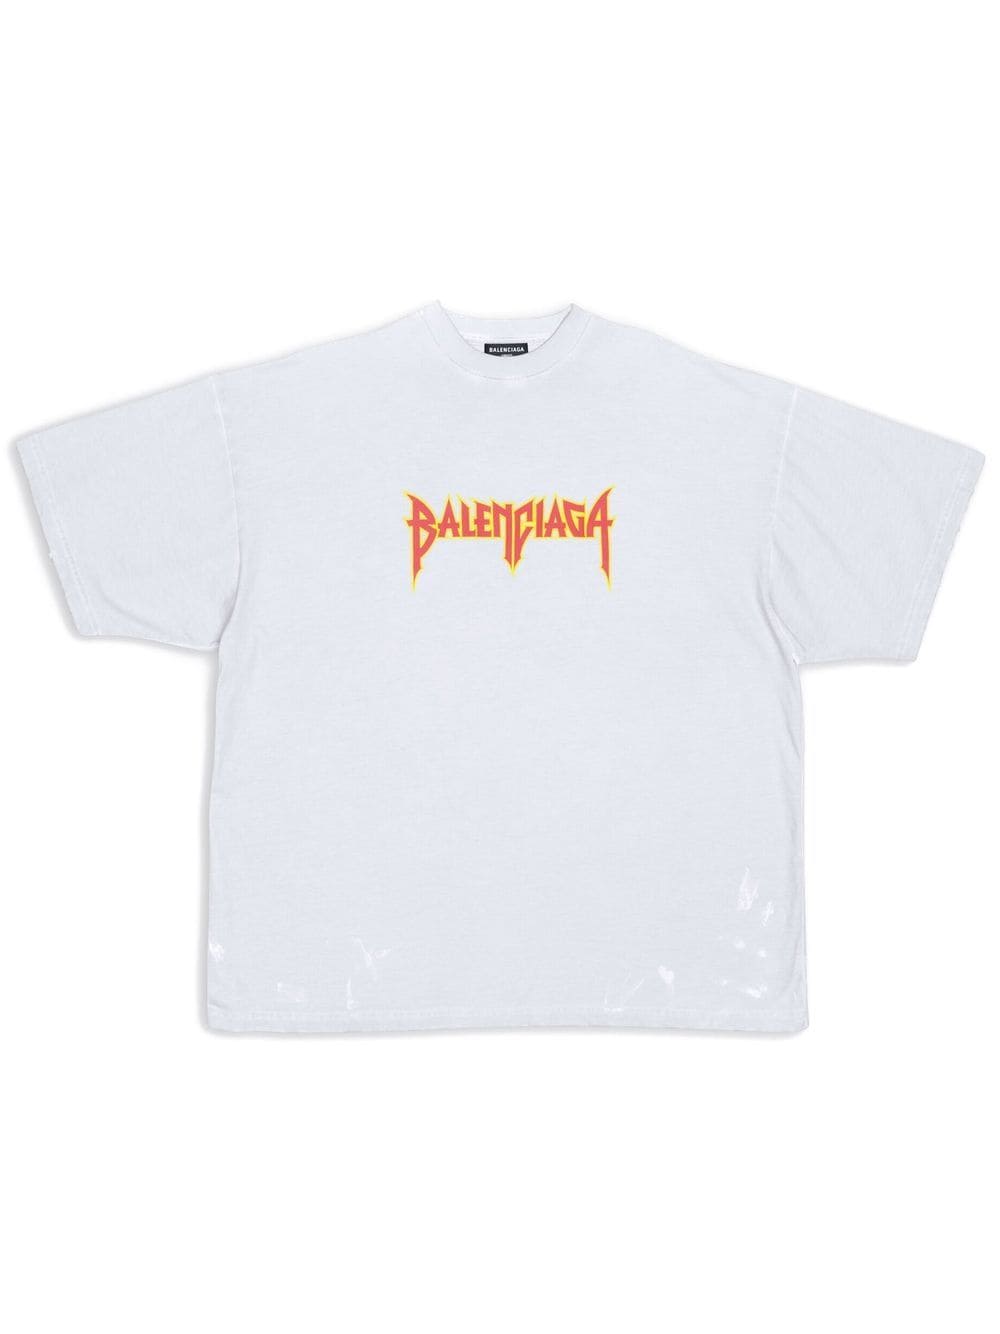 Balenciaga oversized metal logo T-shirt - White